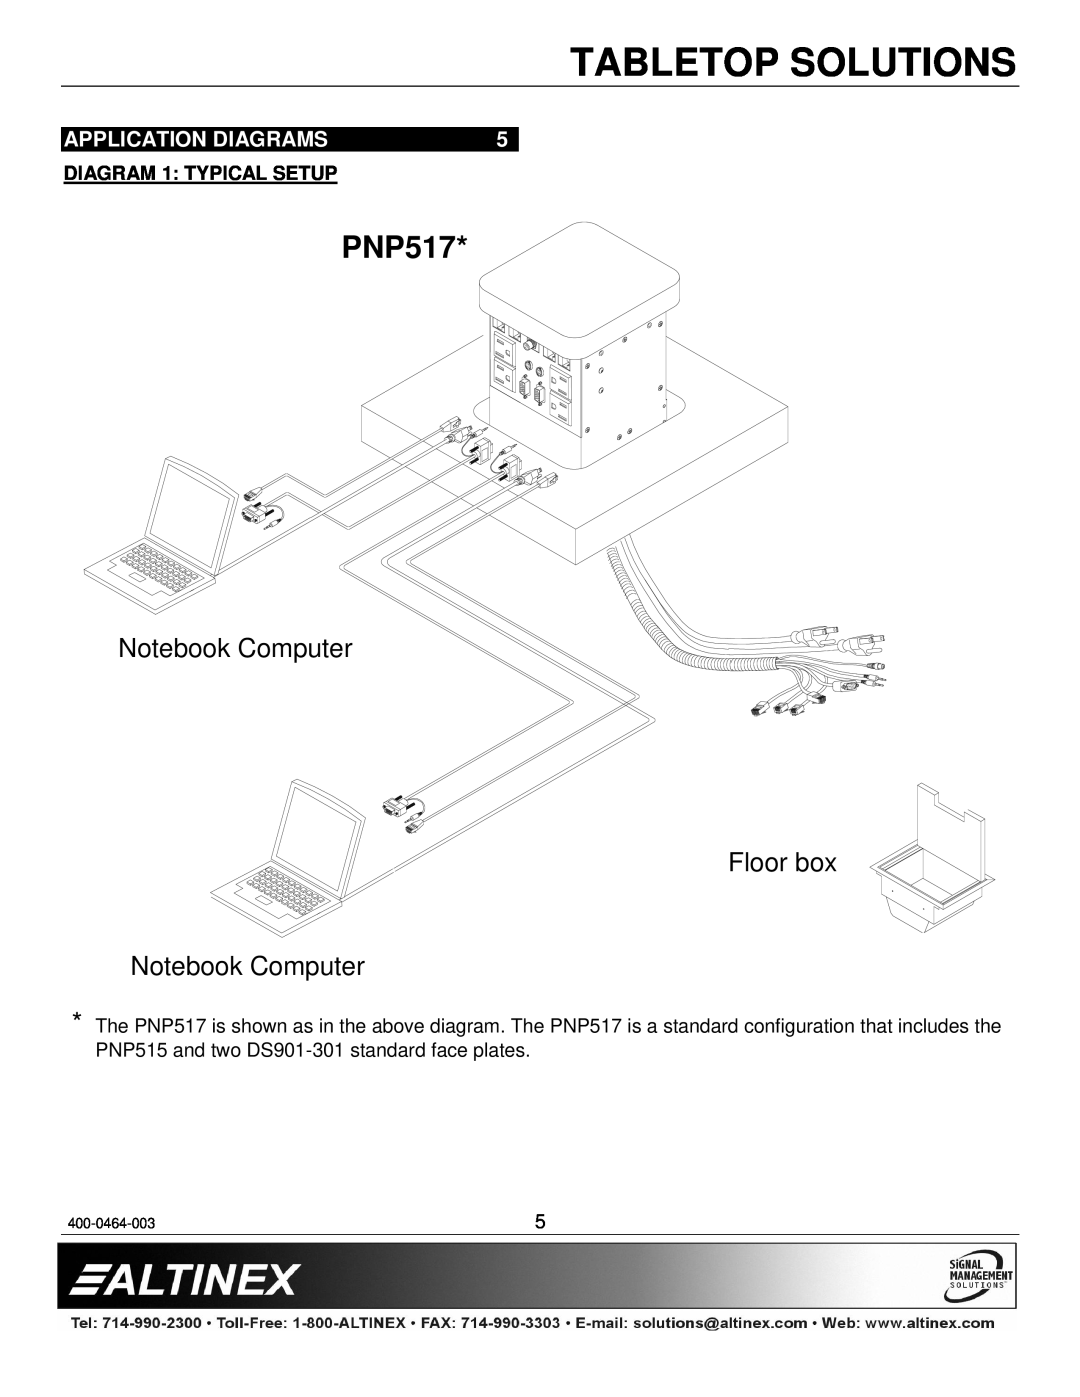 Altinex PNP547C, PNP527C Application Diagrams, Tabletop Solutions, PNP517, Notebook Computer Floor box Notebook Computer 